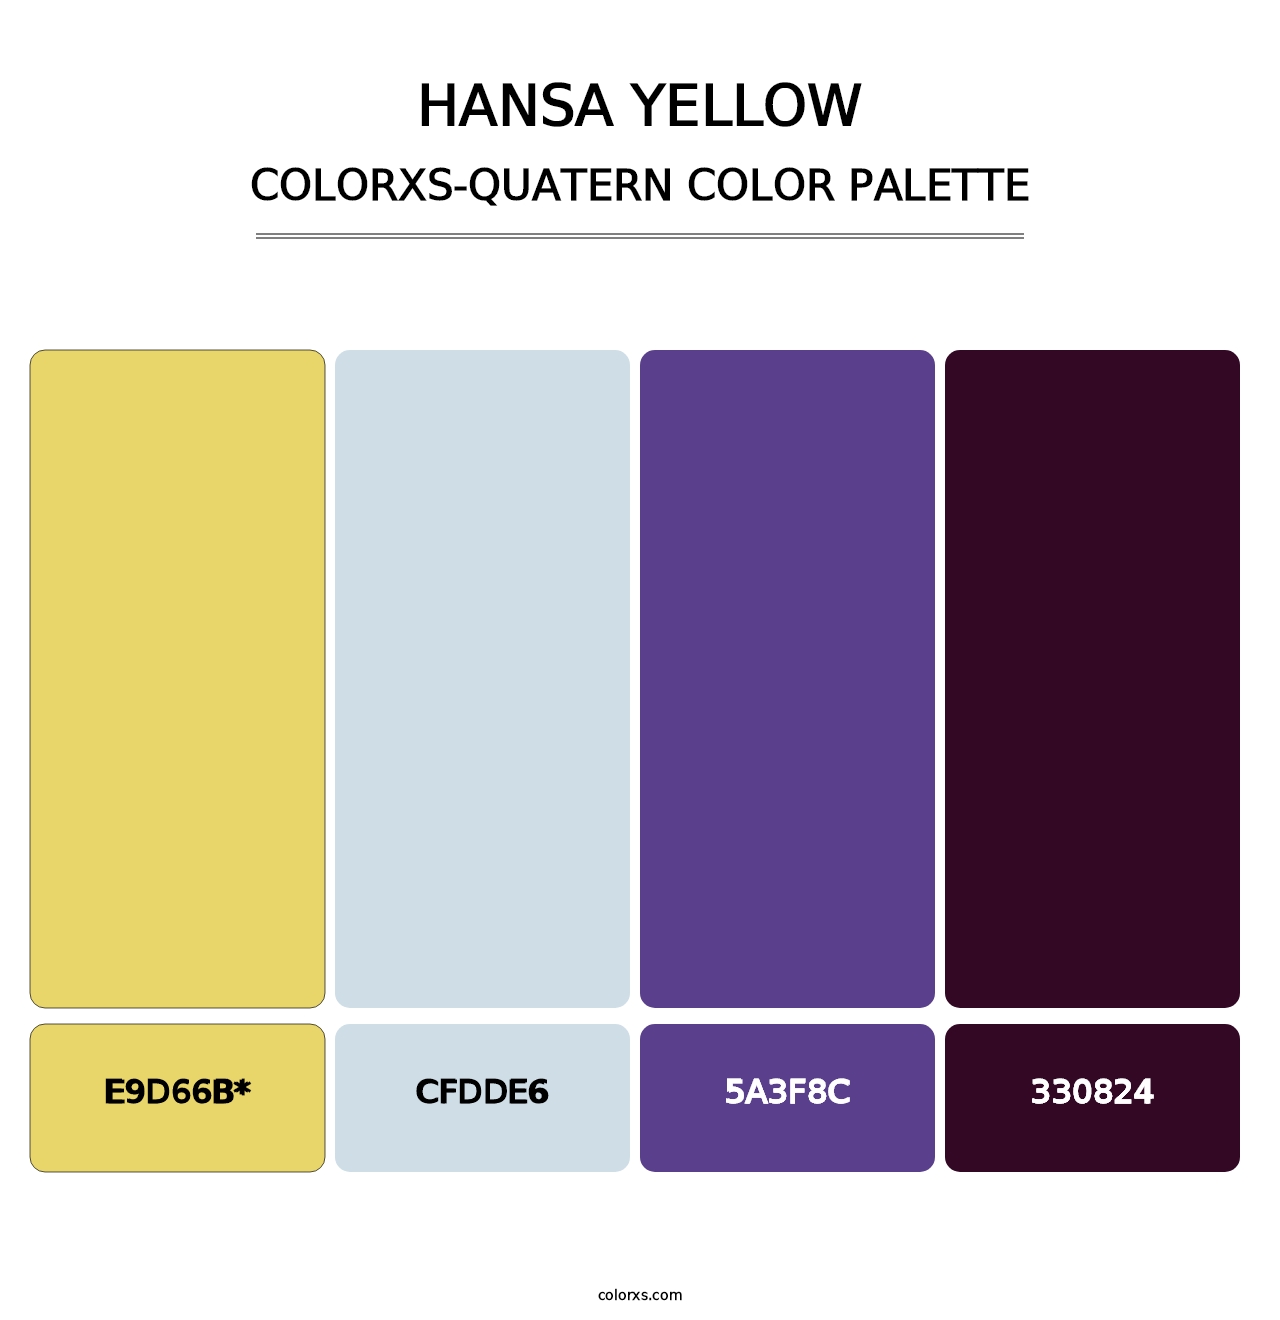 Hansa Yellow - Colorxs Quatern Palette